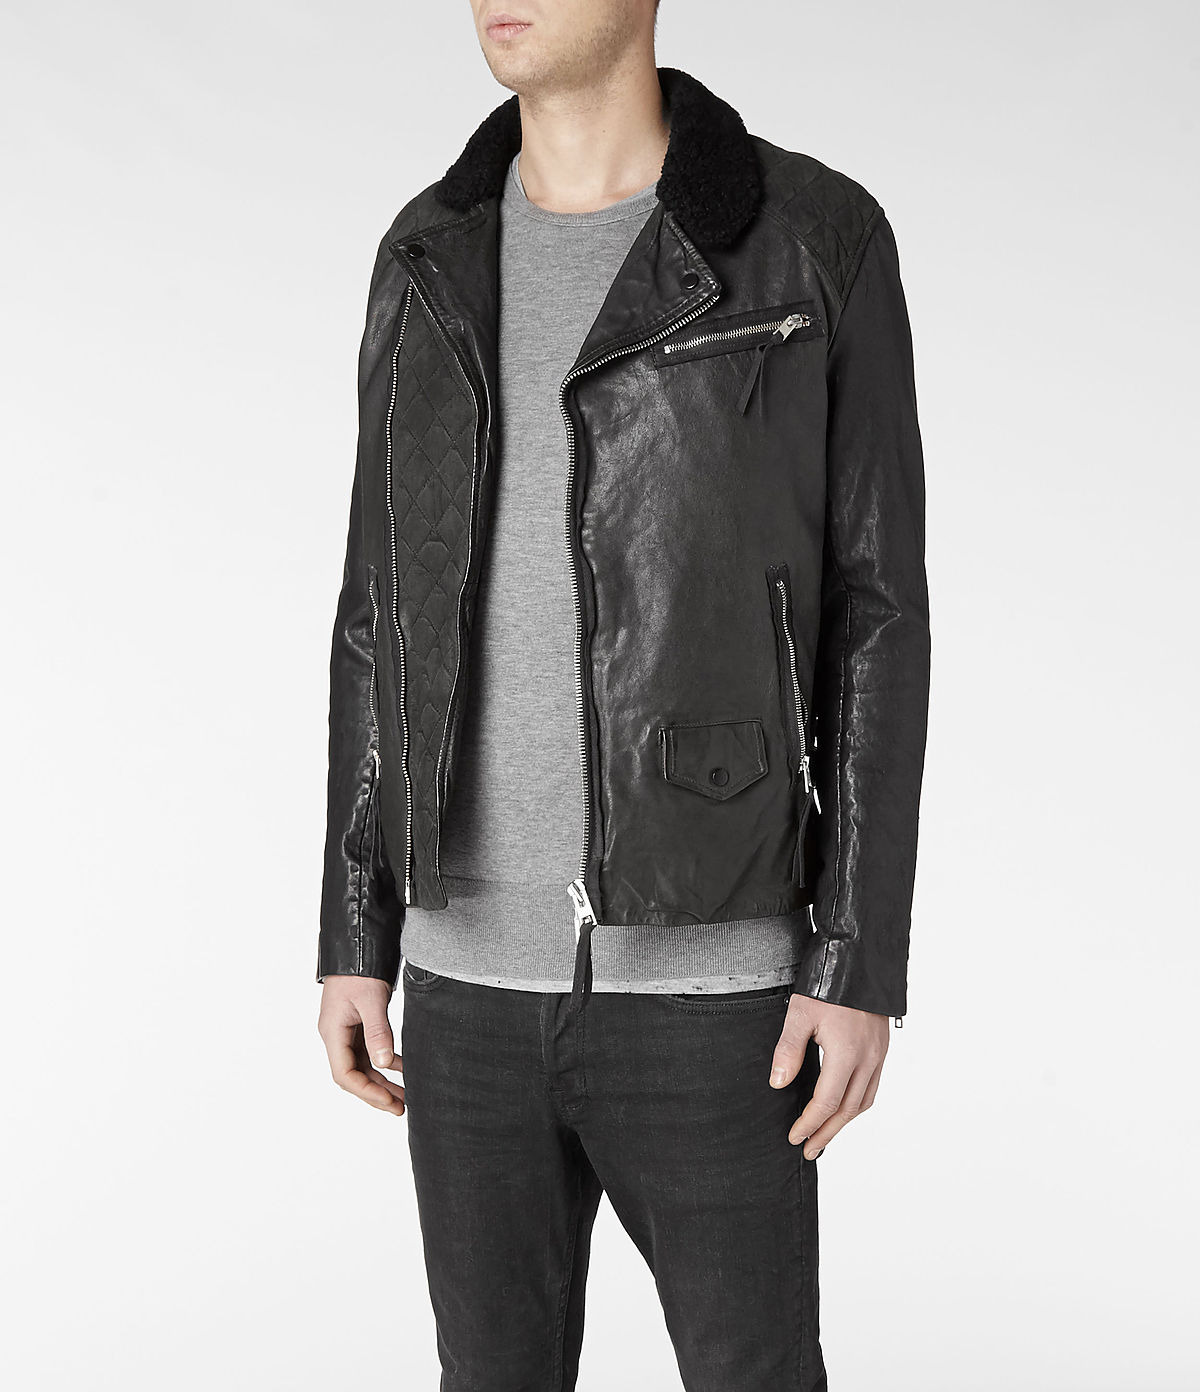 AllSaints Raven Leather Biker Jacket in Anthracite (Gray) for Men - Lyst